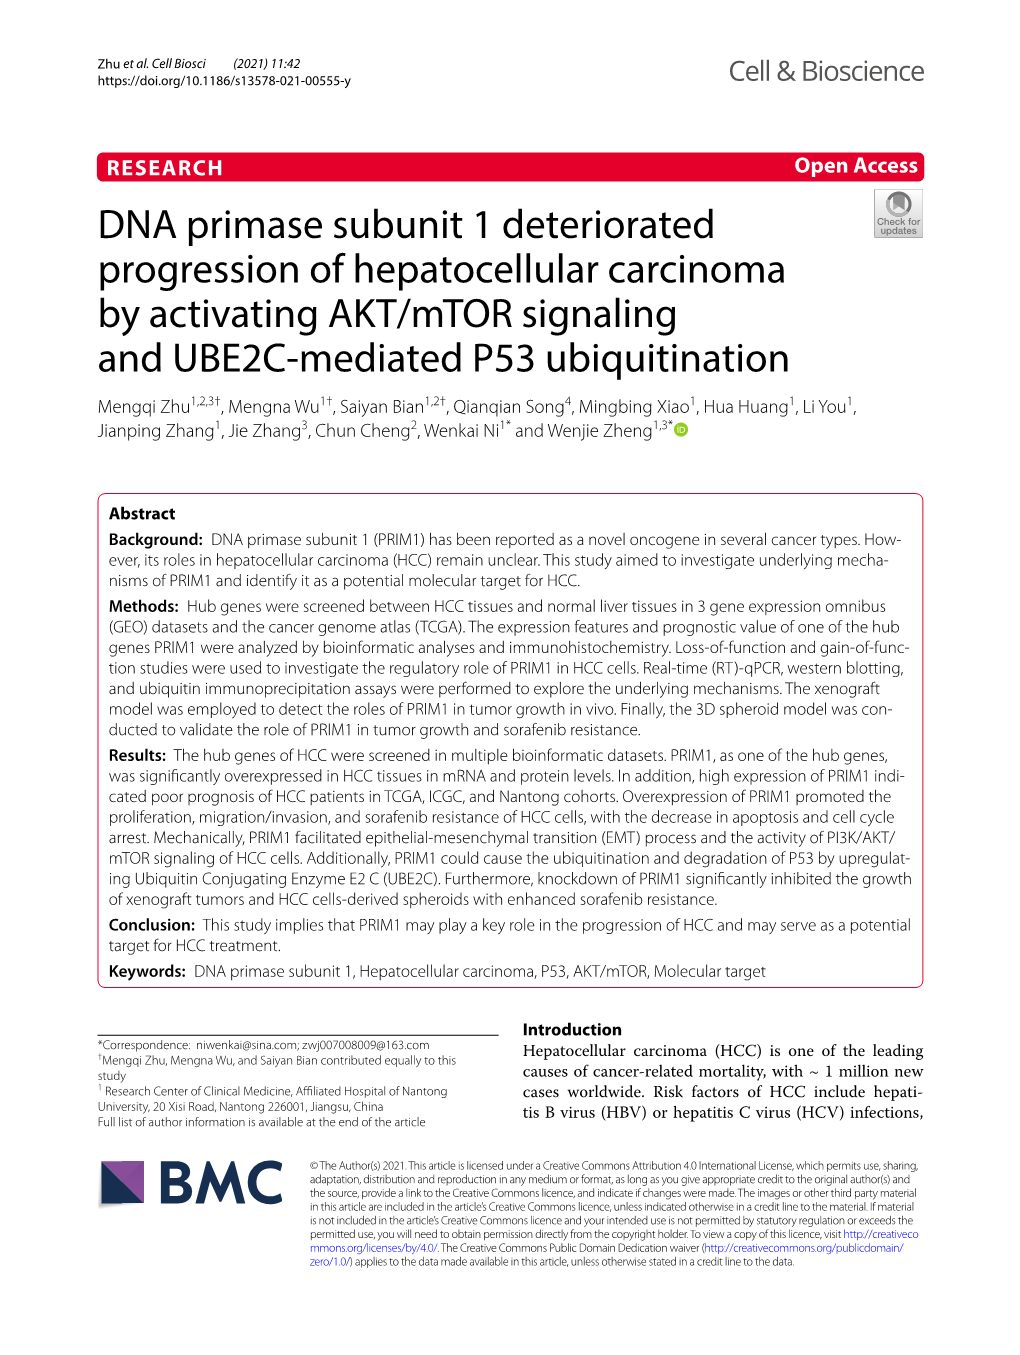 DNA Primase Subunit 1 Deteriorated Progression of Hepatocellular